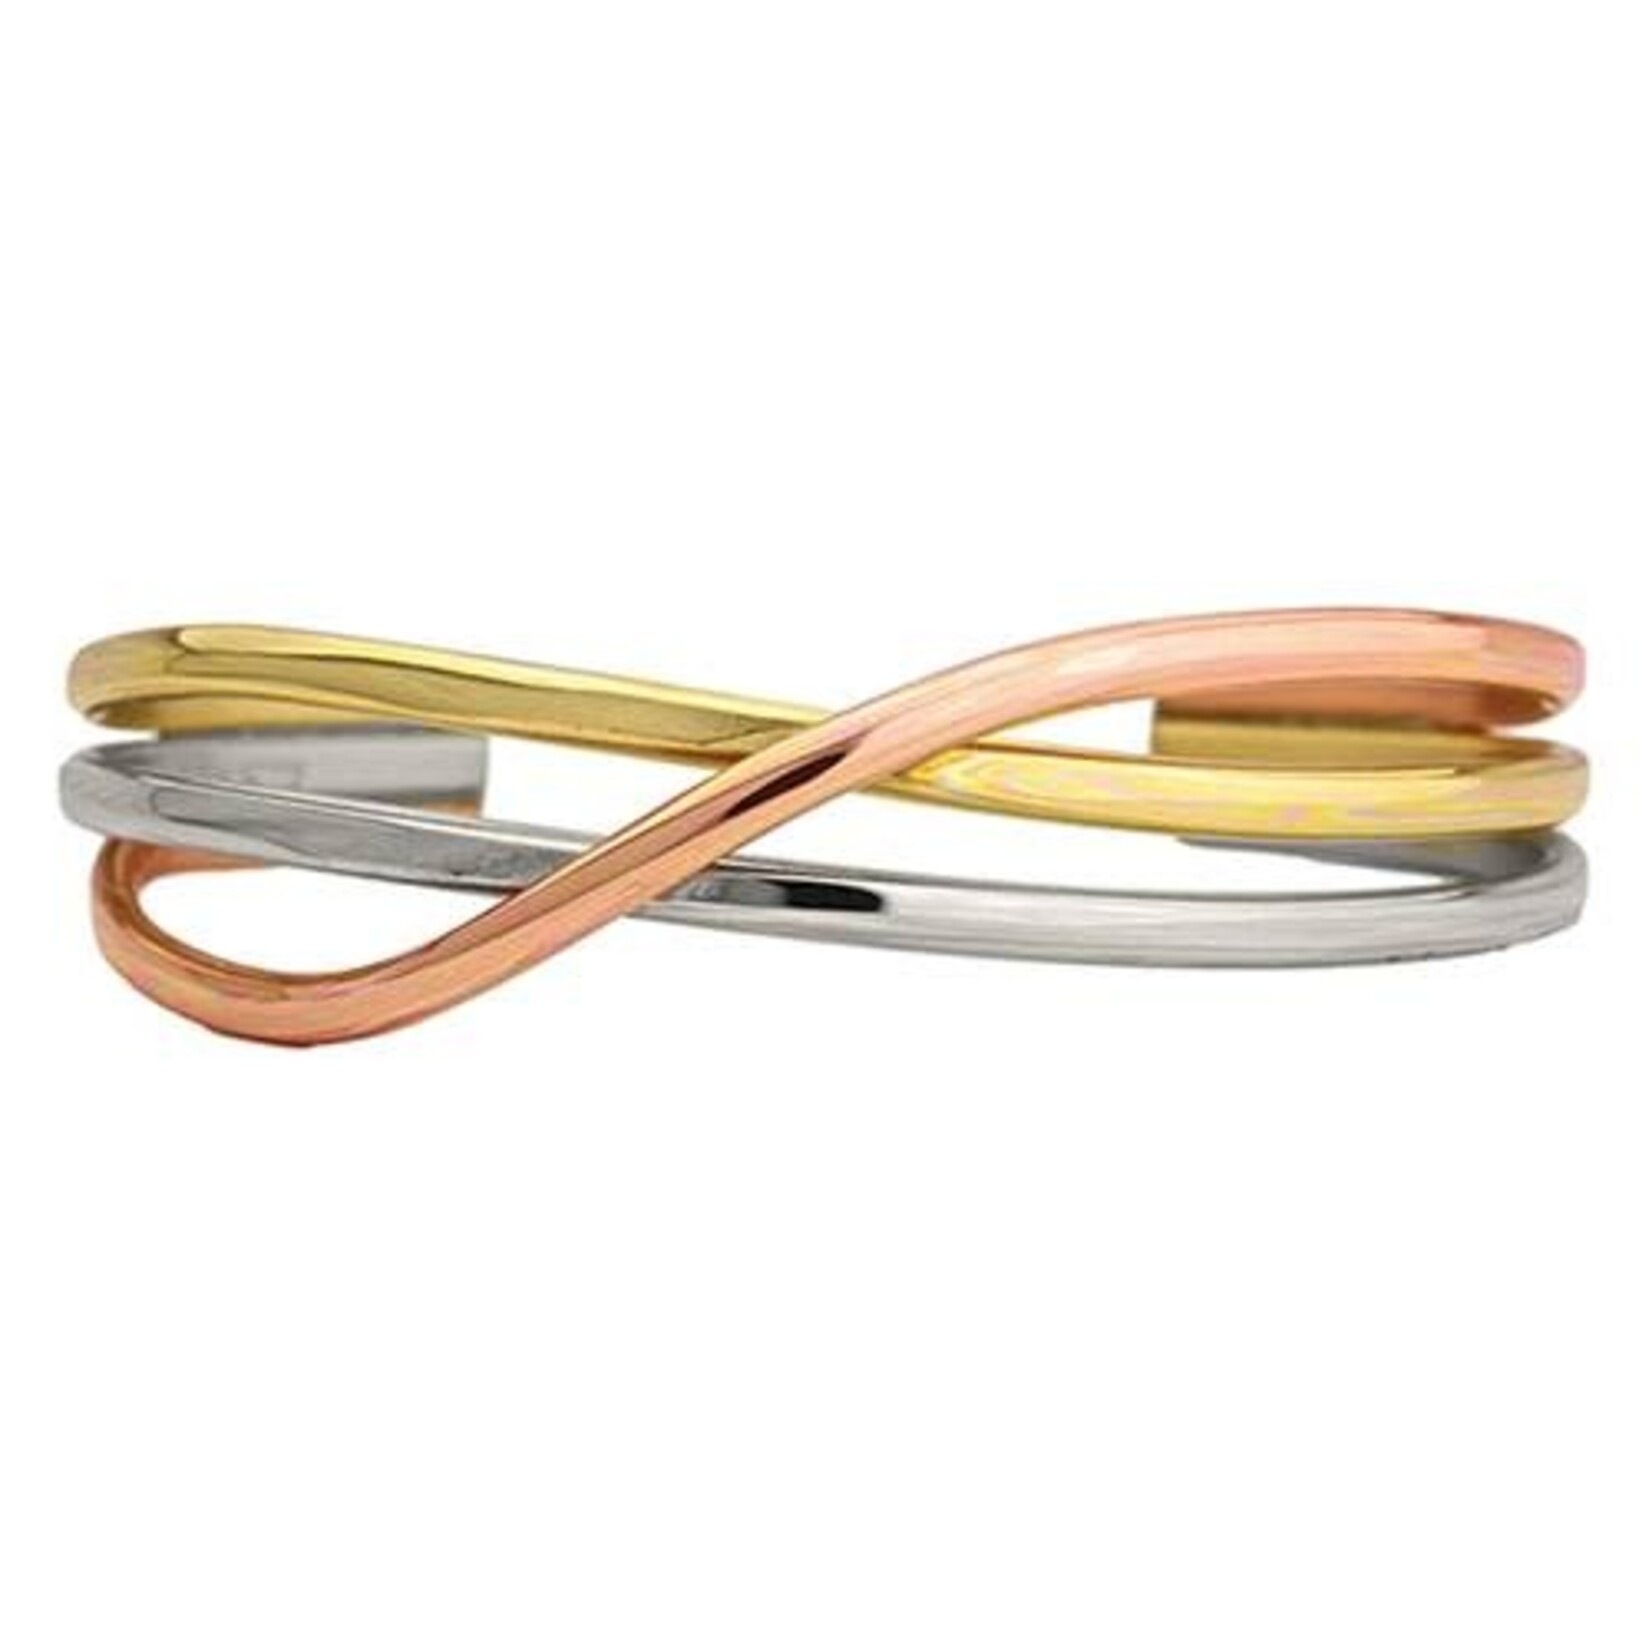 Sergio Lub Copper Bracelets Sergio Lub Copper Bracelets - $55